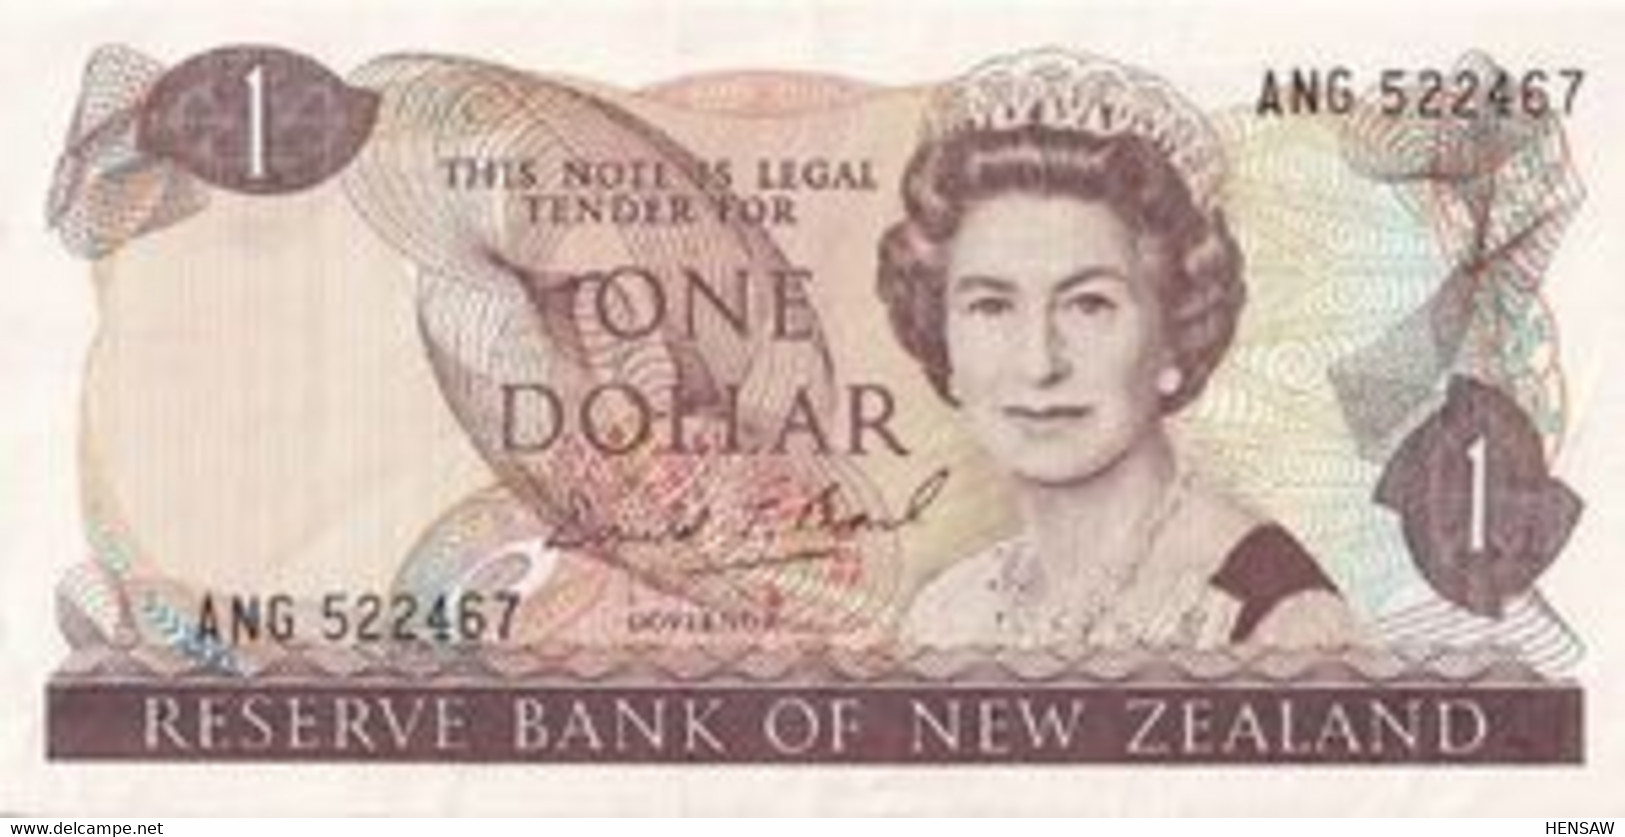 NEW ZEALAND 1 DOLLAR 1985 P 169b UNC SC NUEVO - Neuseeland